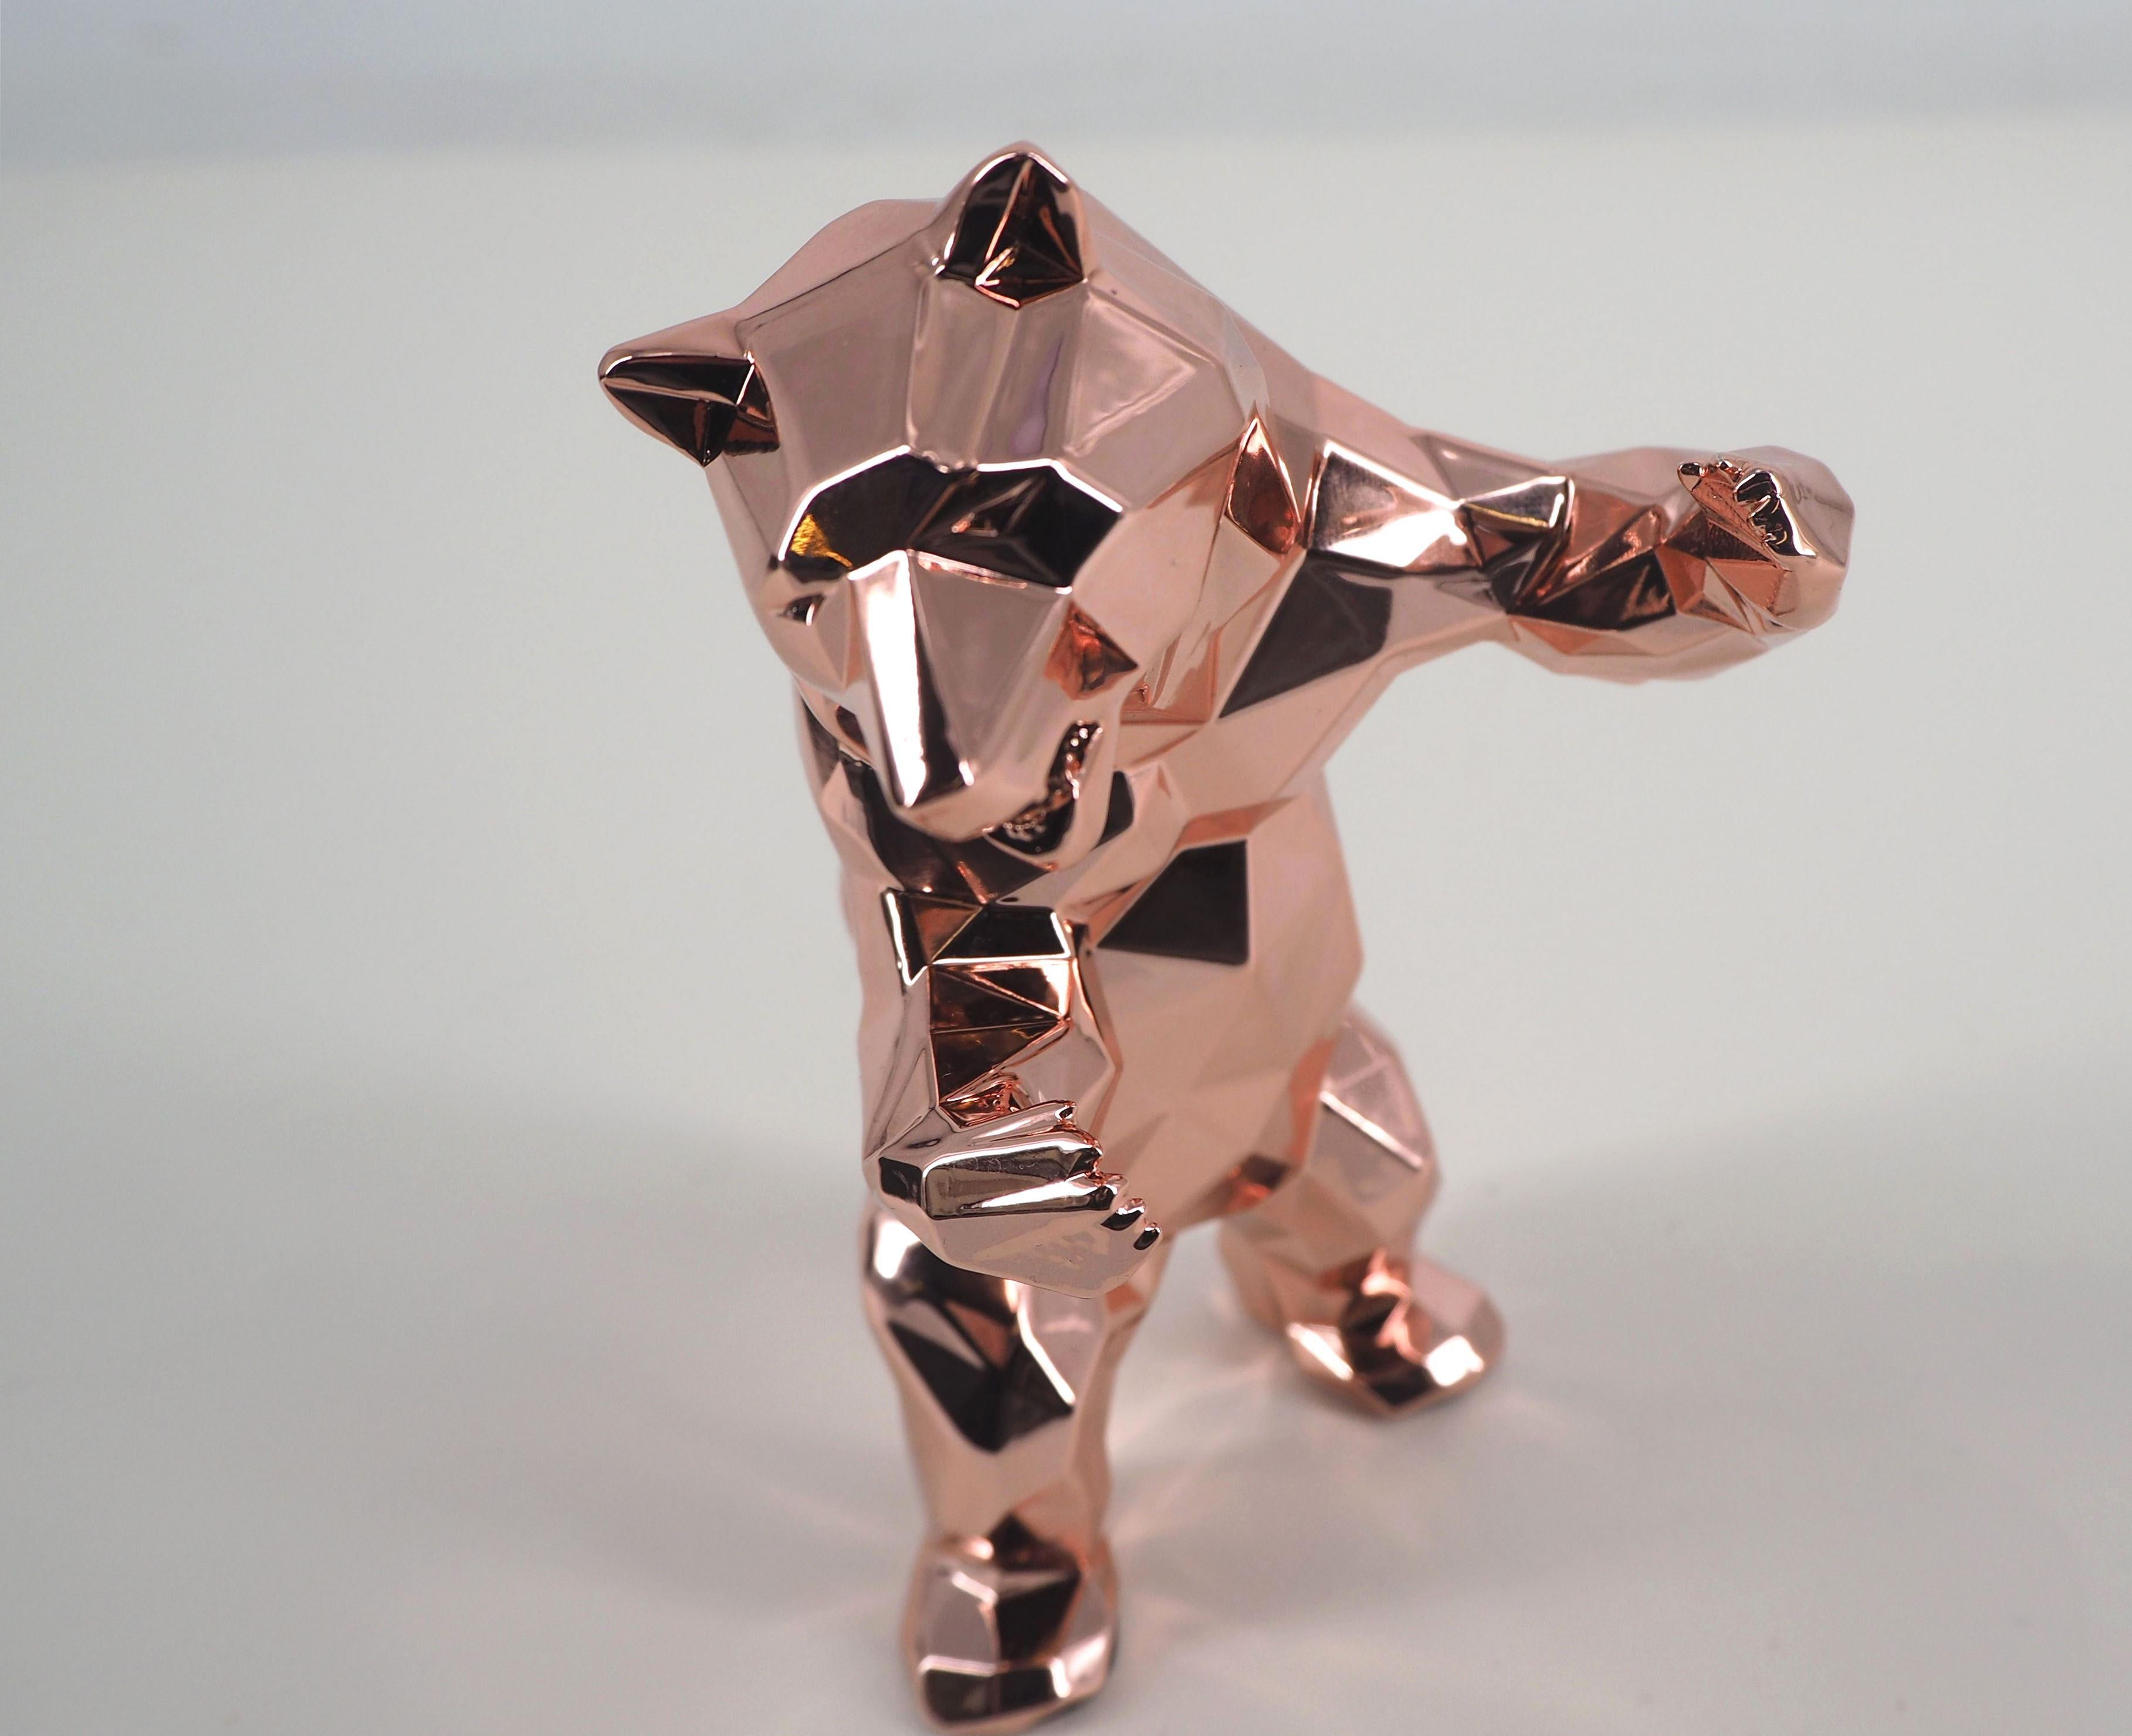 Standing Bear (Gold Pink Edition) - Sculpture in original box with artist coa - Gray Figurative Sculpture by Richard Orlinski